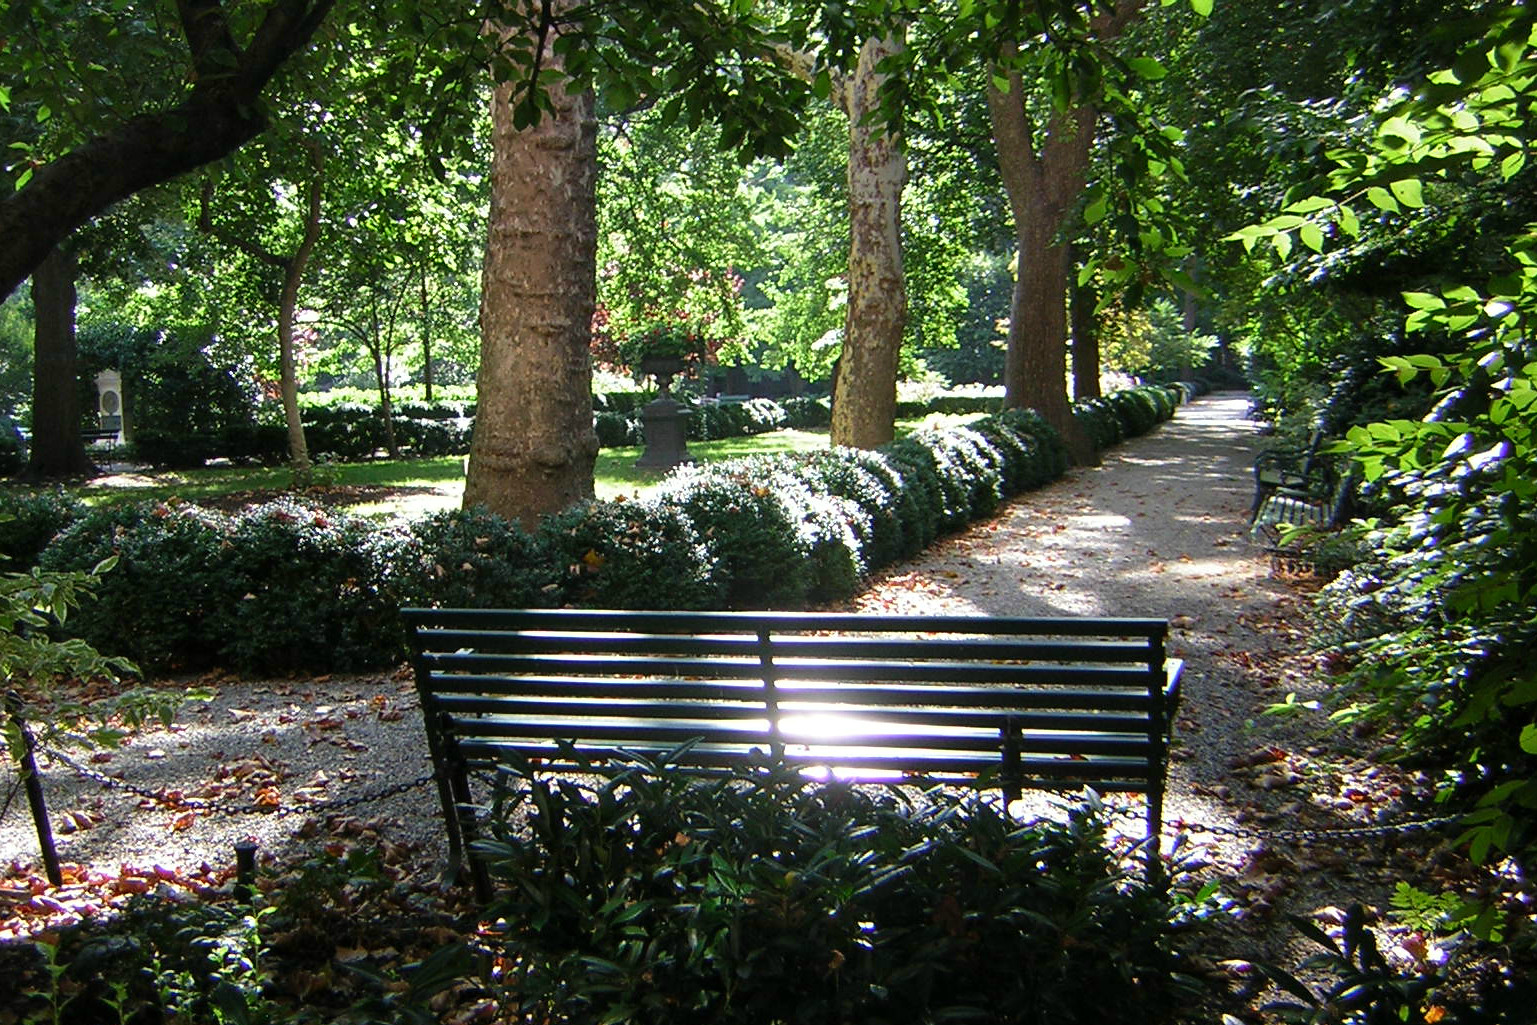 Gramercy Park in New York City, USA.